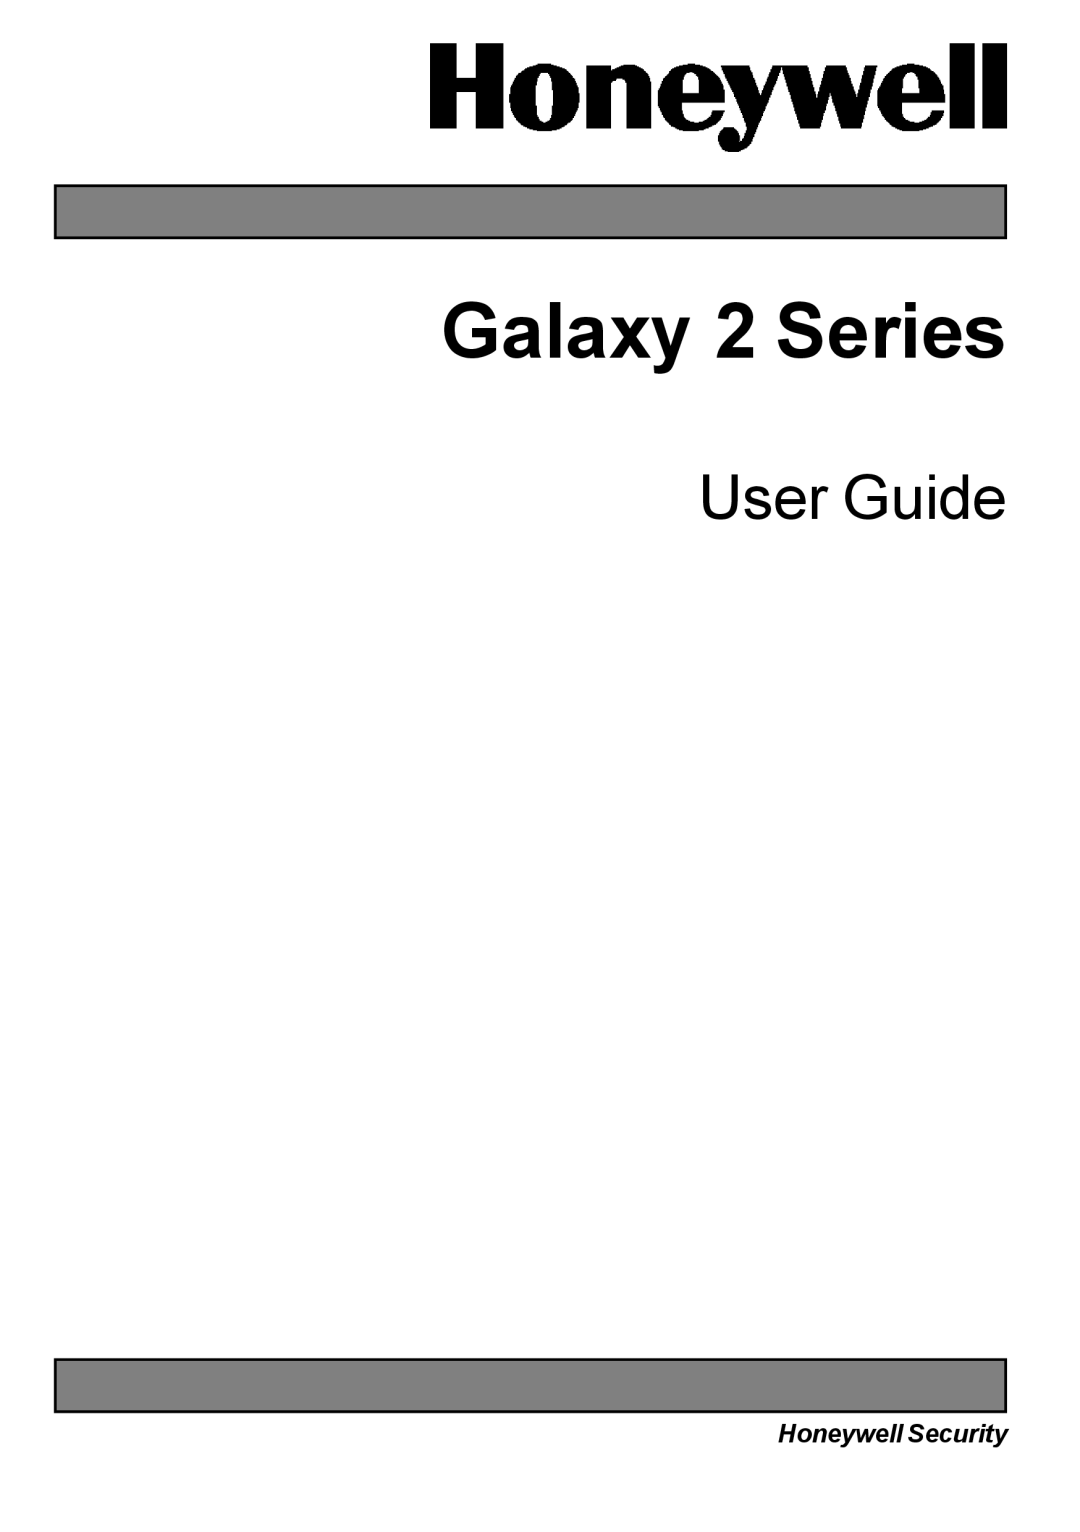 Honeywell manual Galaxy 2 Series, User Guide, Honeywell Security 